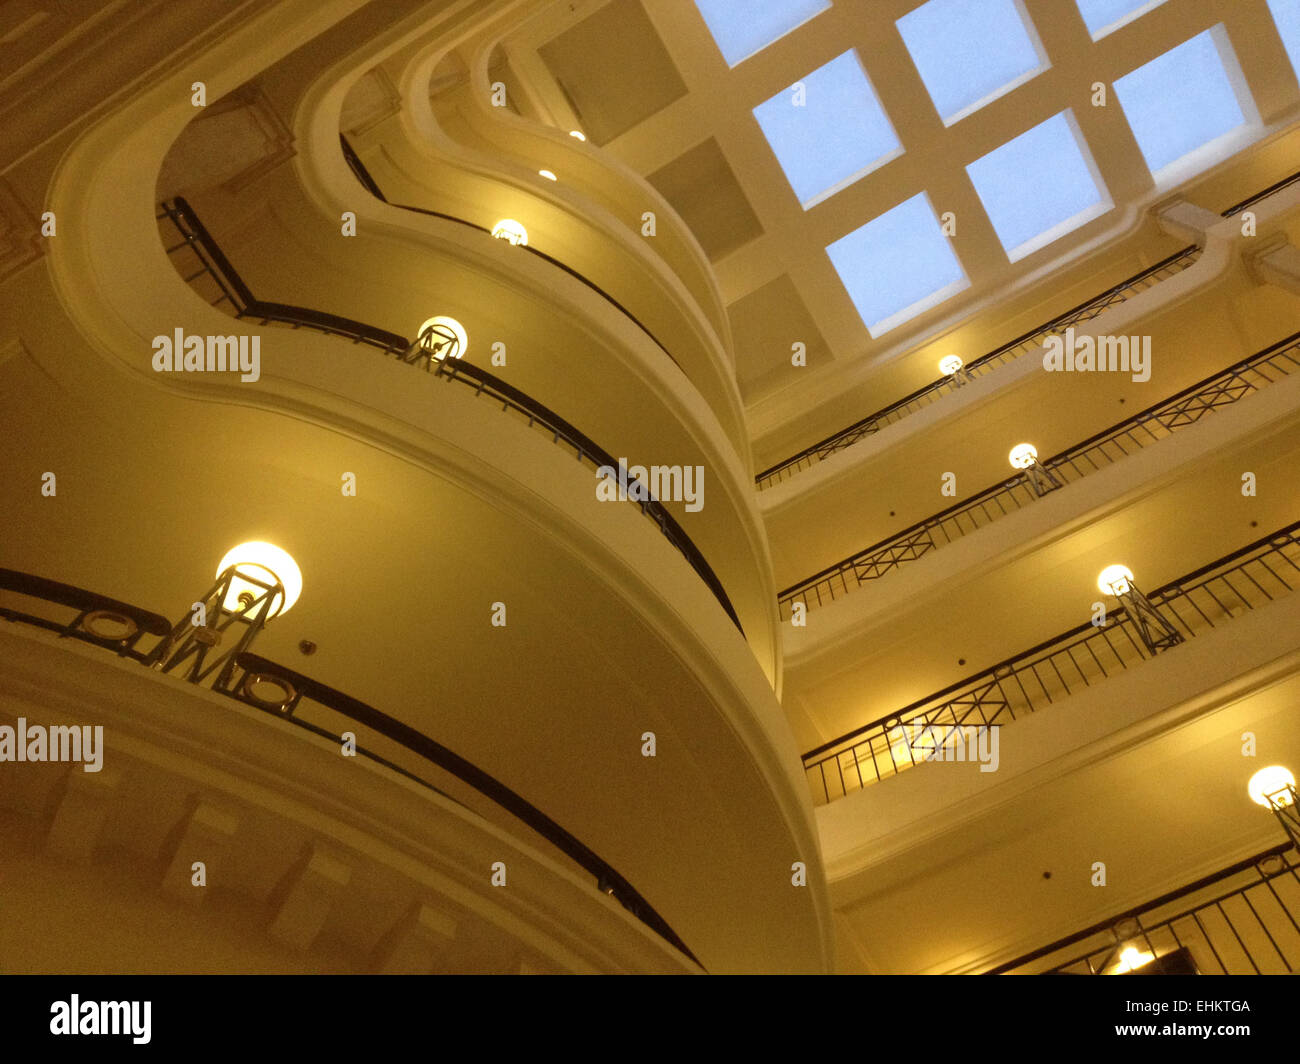 The skylight ceiling at the ITC Windsor Hotel, Bangalore, India. Stock Photo